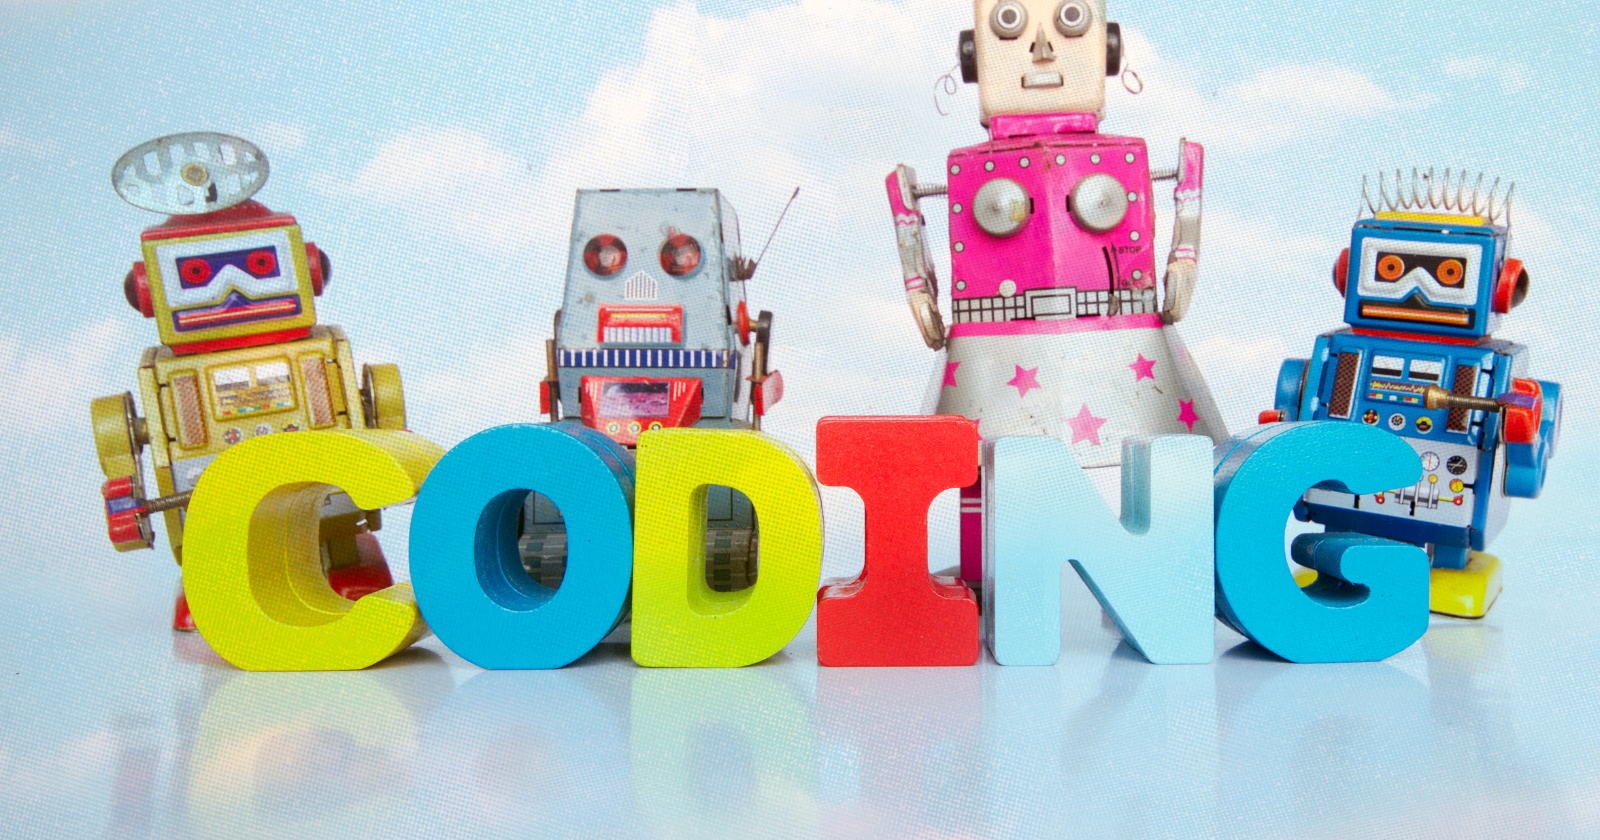 Toy robots beside 'CODING' blocks illustrating JavaScript learning